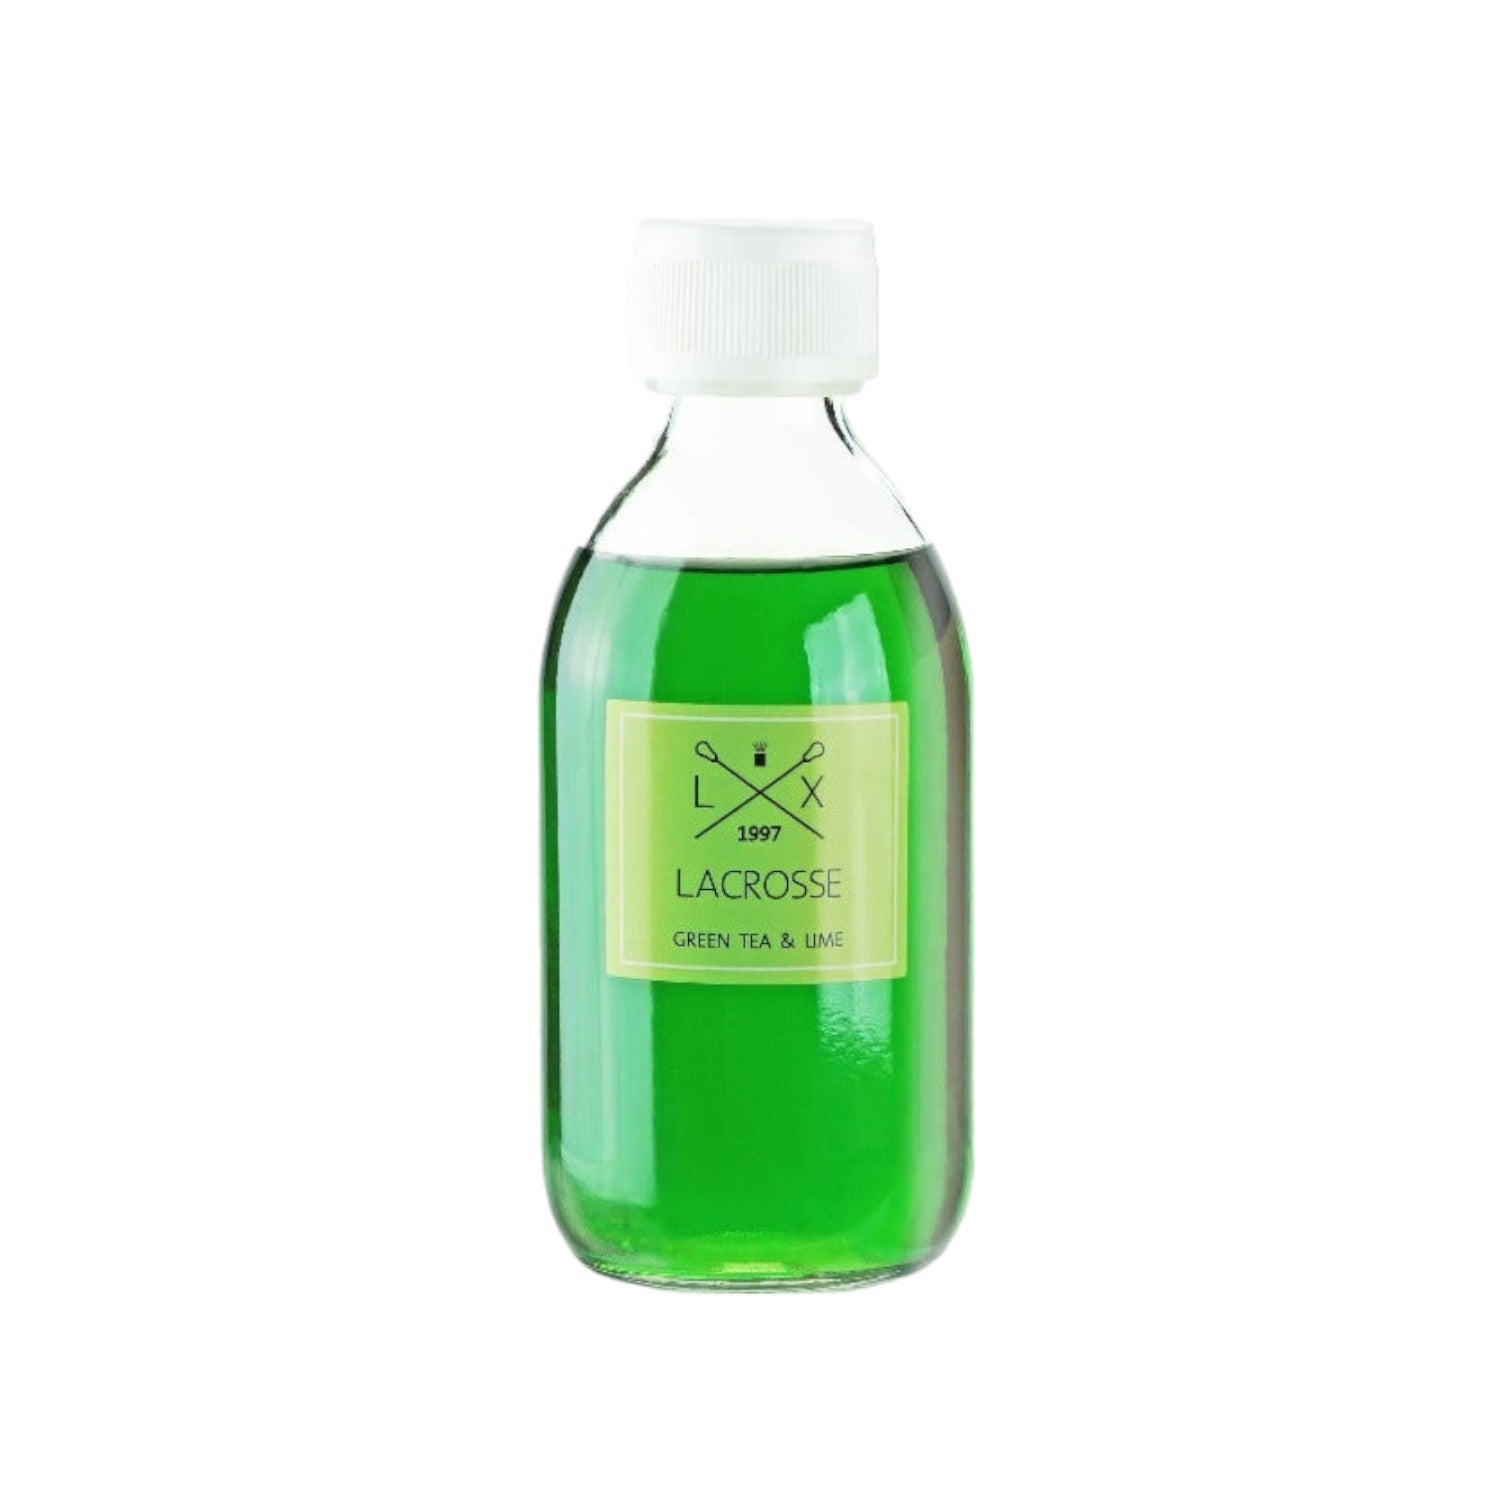 Lacrosse - Geurdiffuser refill 'Green Tea & Lime' - 250ml